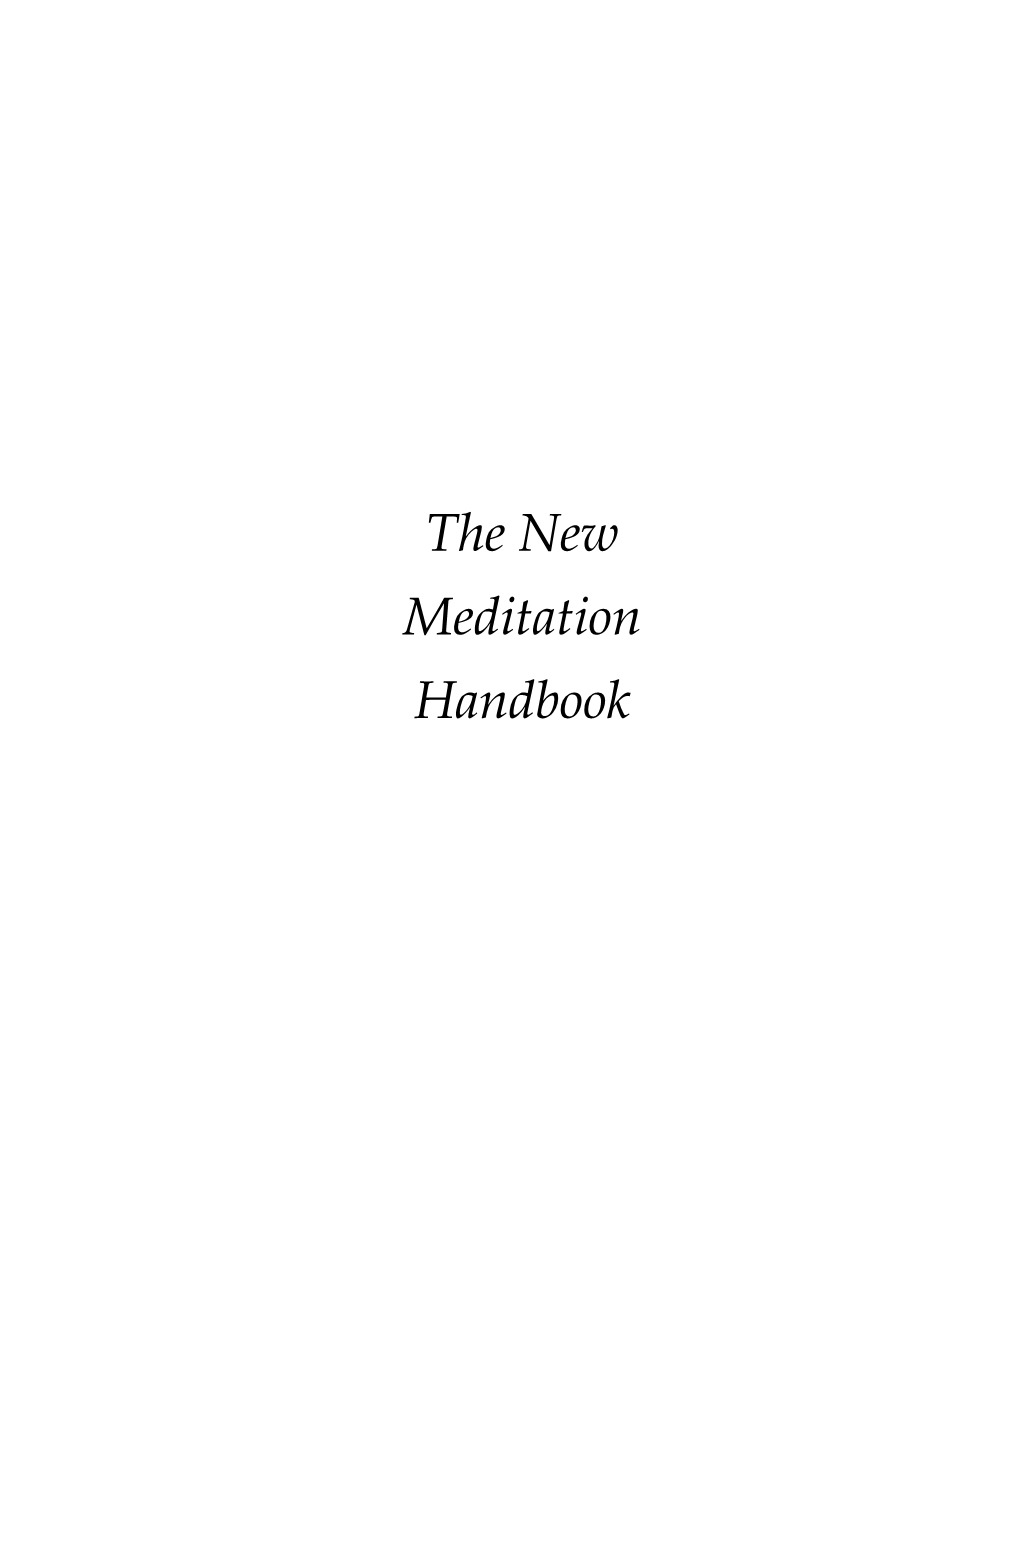 The New Meditation Handbook Also by Venerable Geshe Kelsang Gyatso Rinpoche